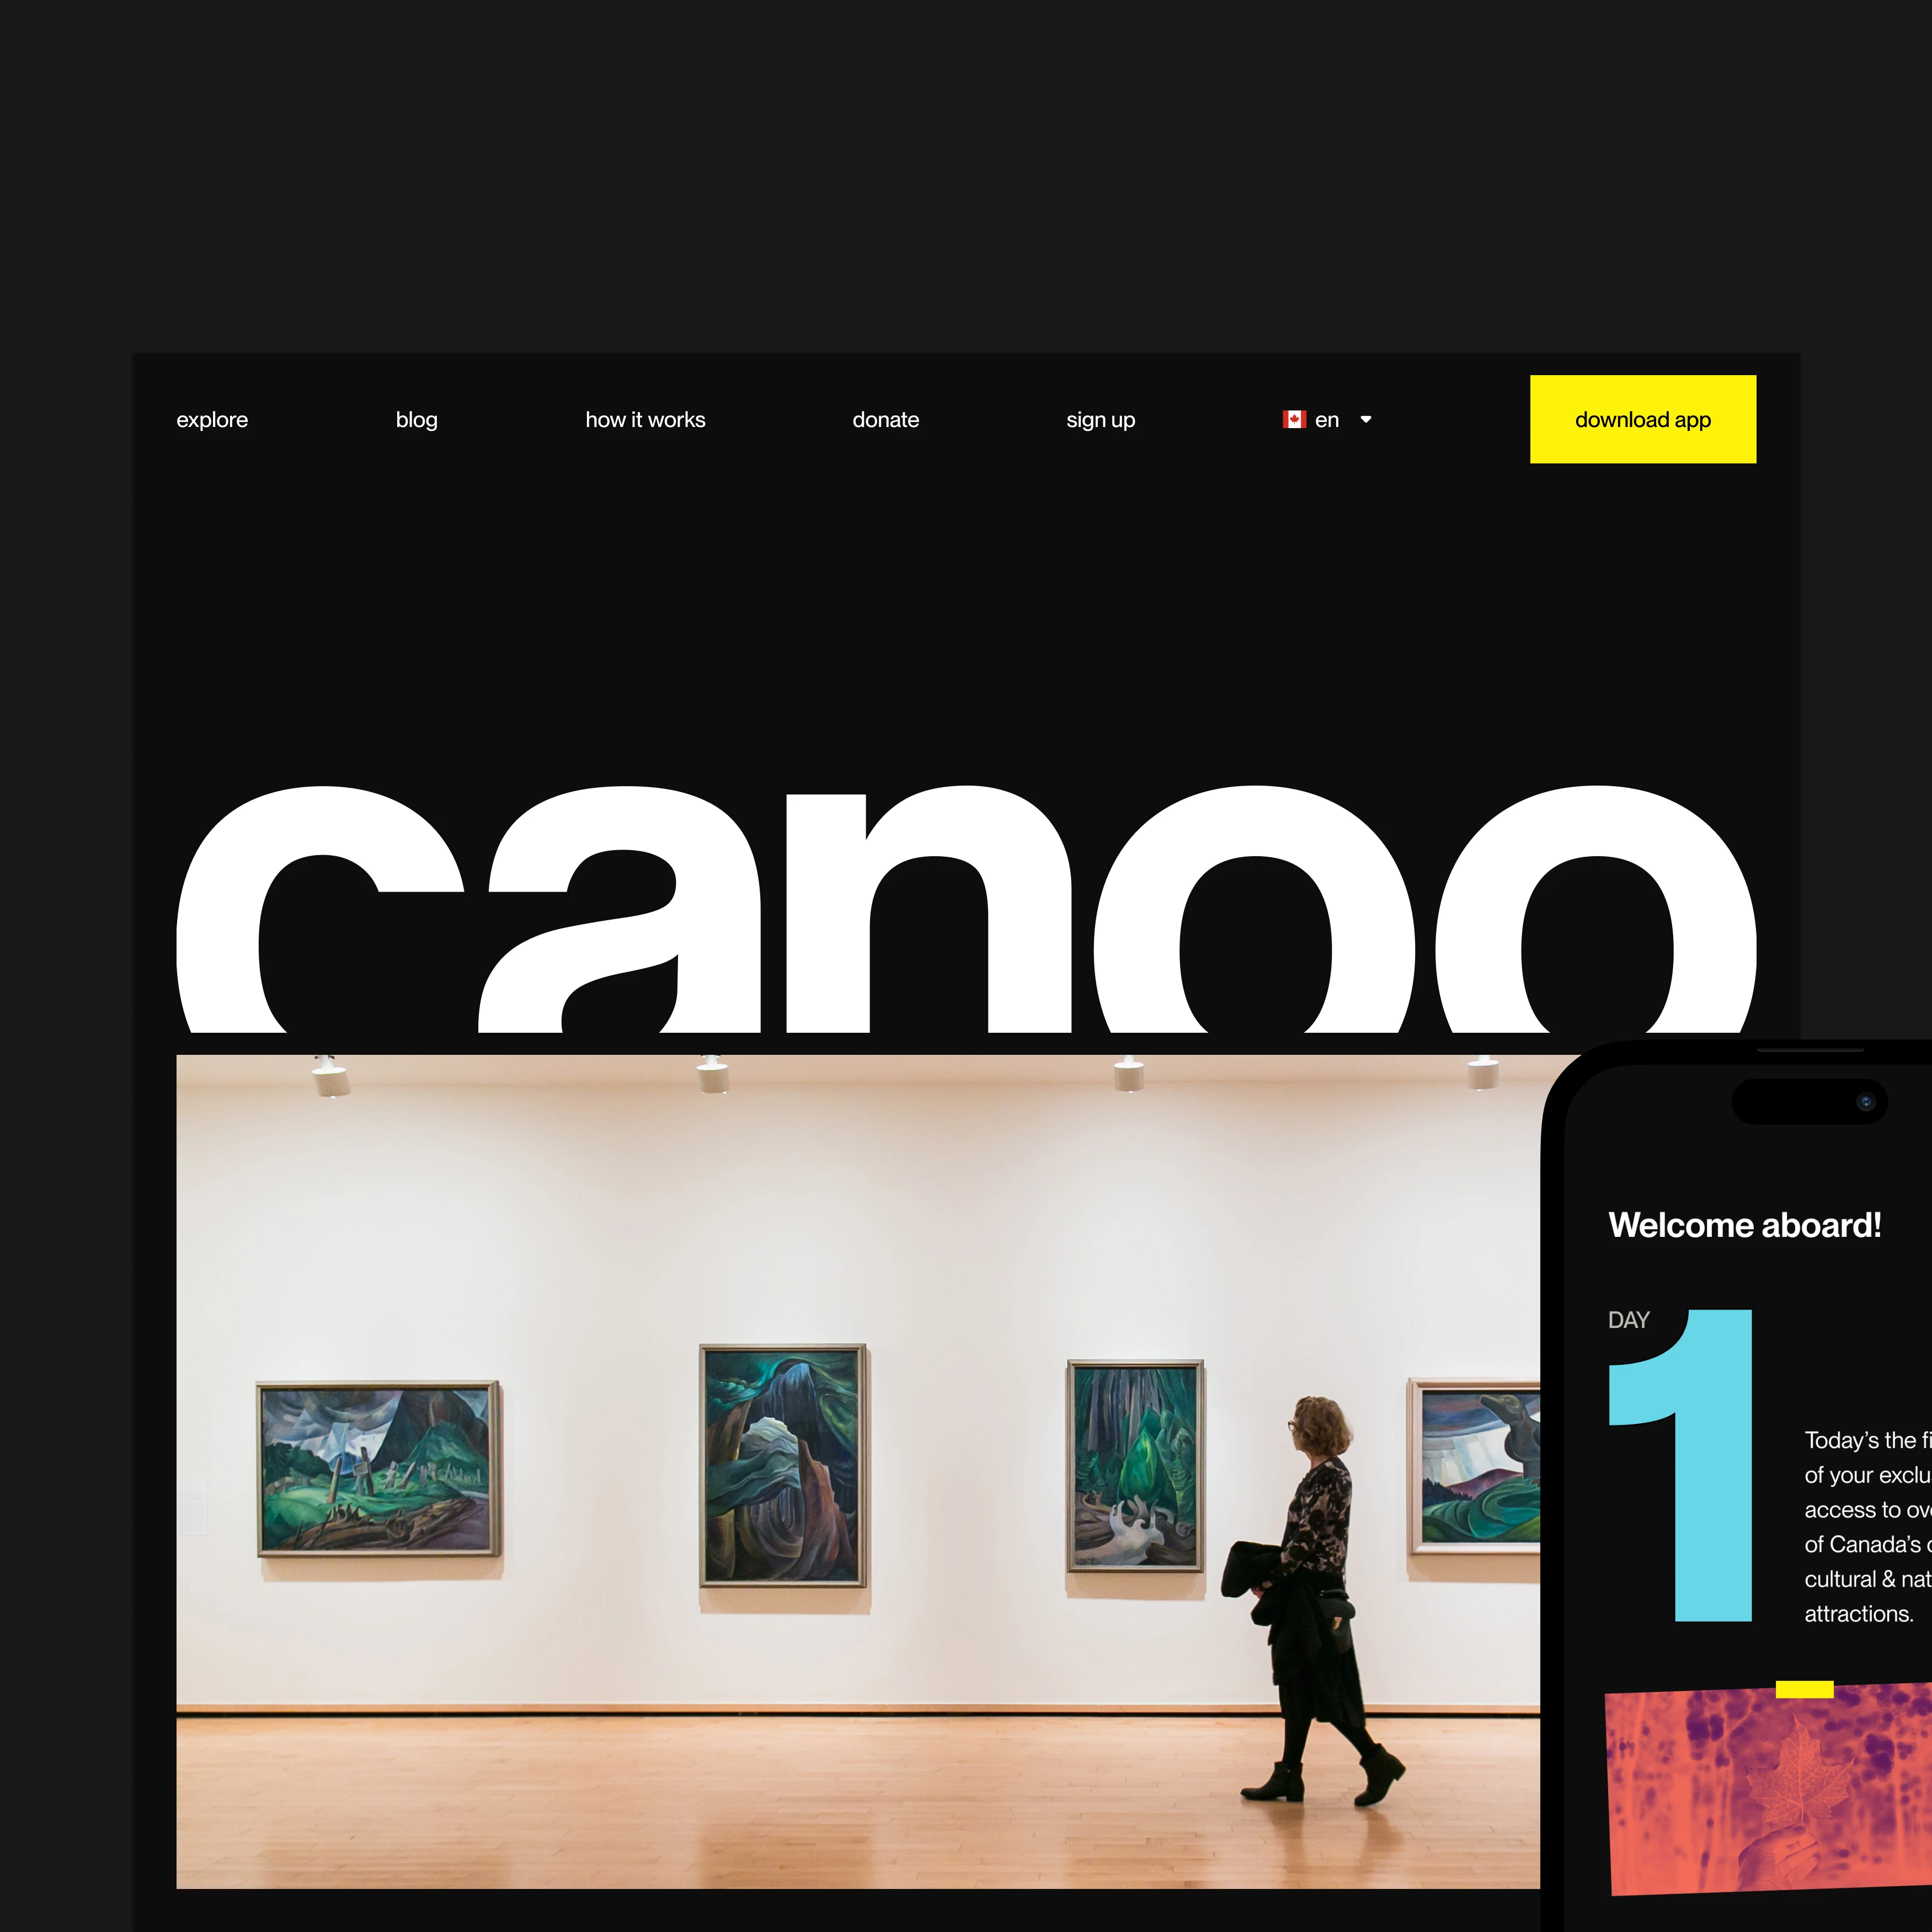 canoo website and app